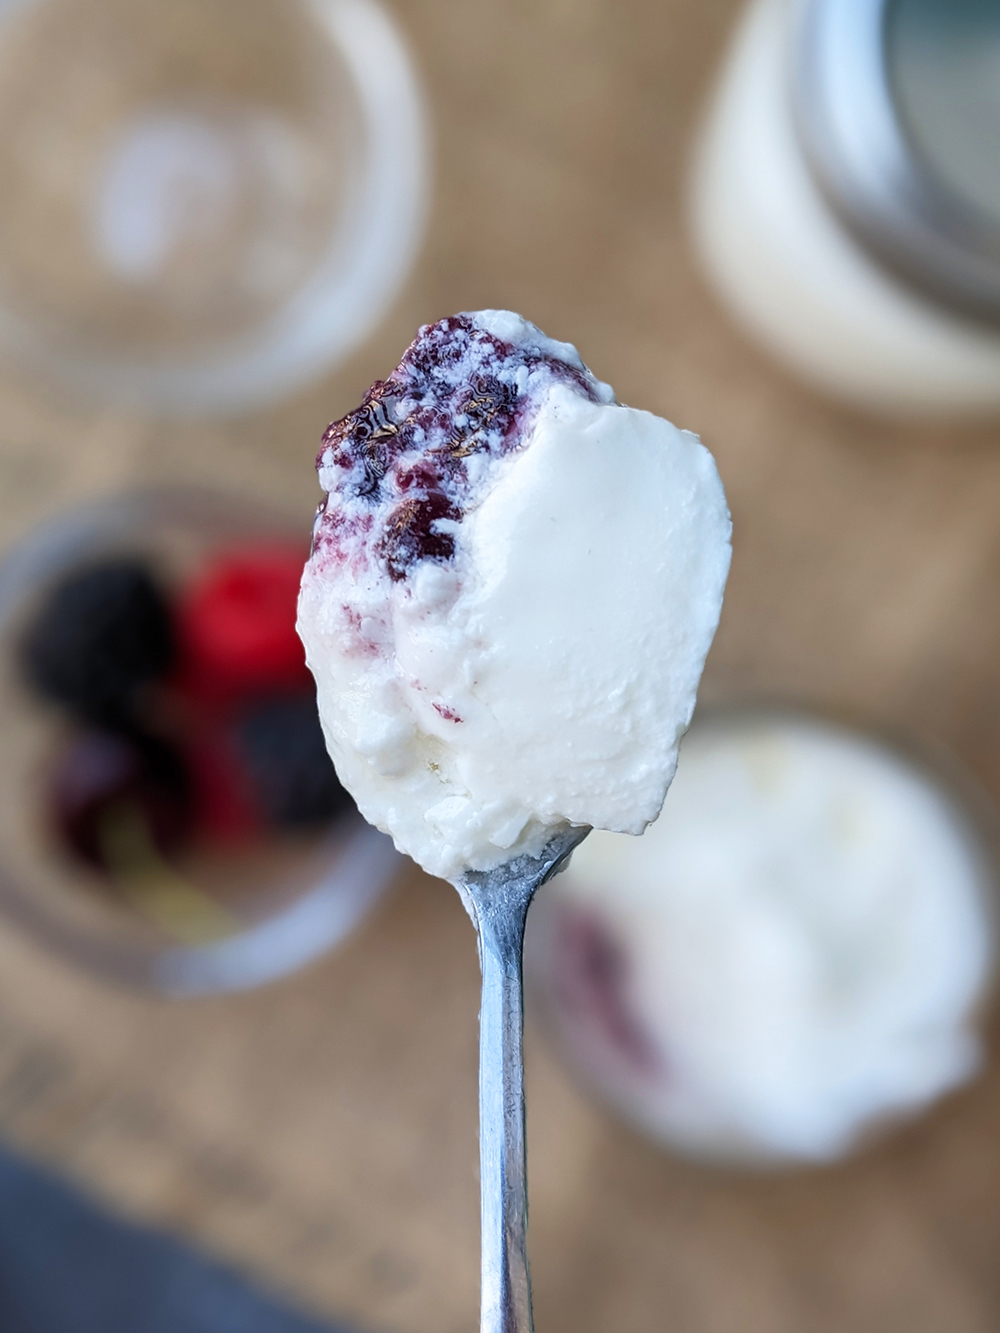 Homemade yogurt with blueberry jam